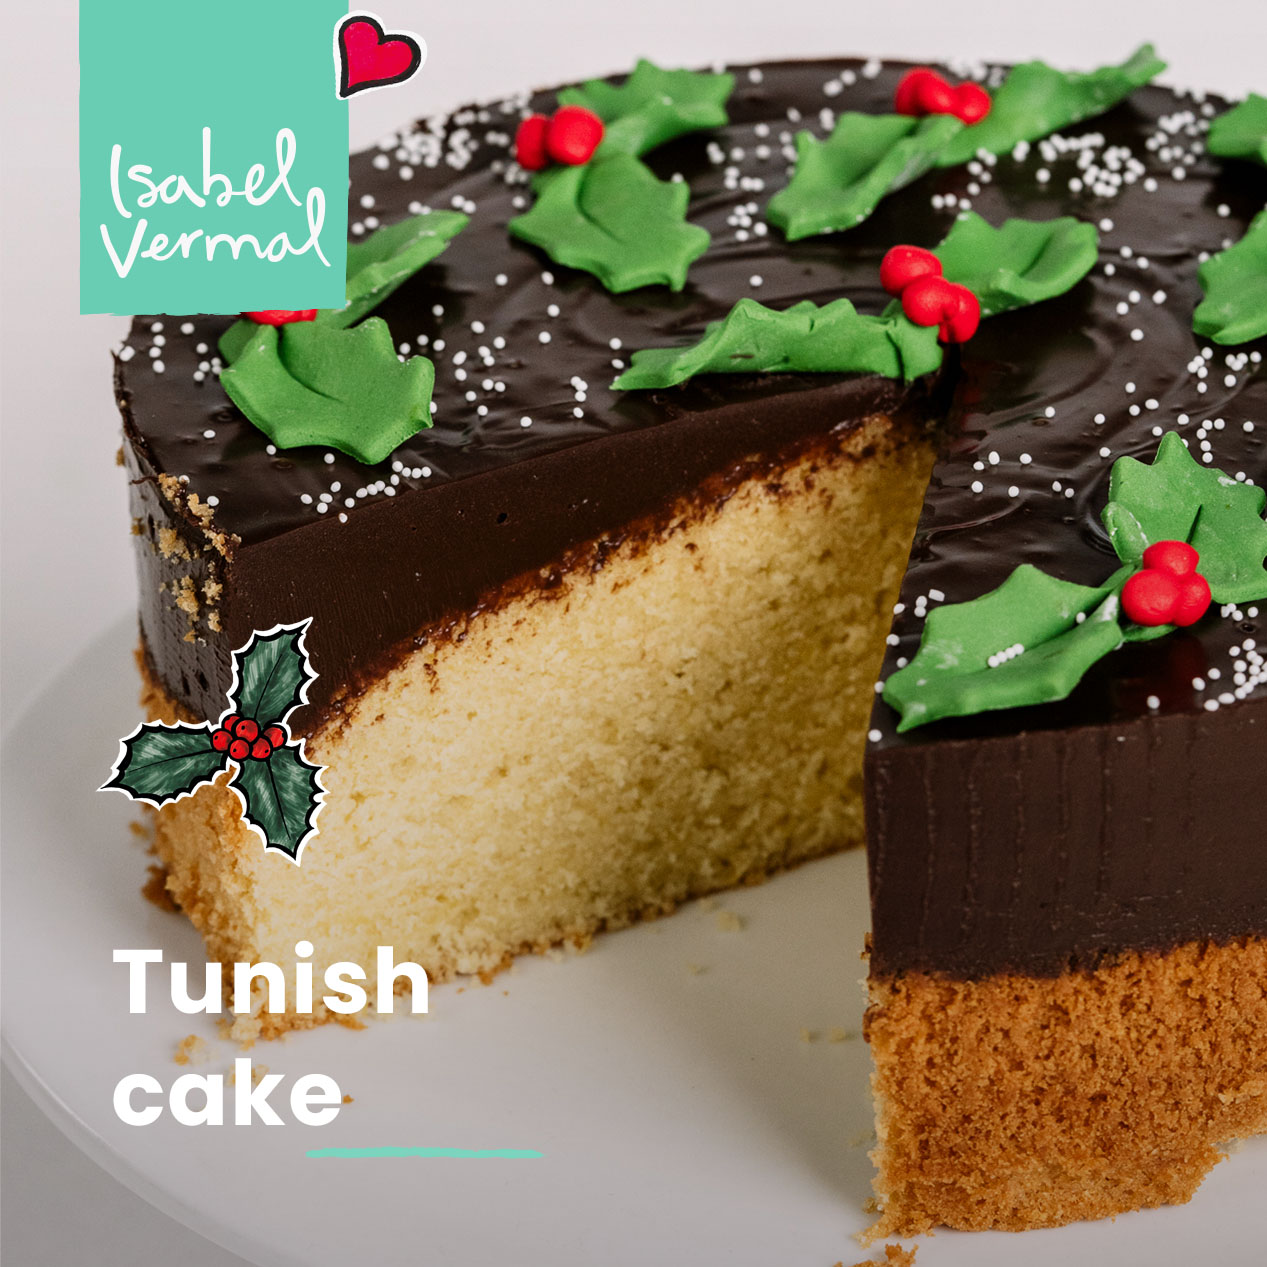 Homemade] Tunis Cake (Lemon and Almond cake base) with a Chocolate Ganache  topping! : r/food